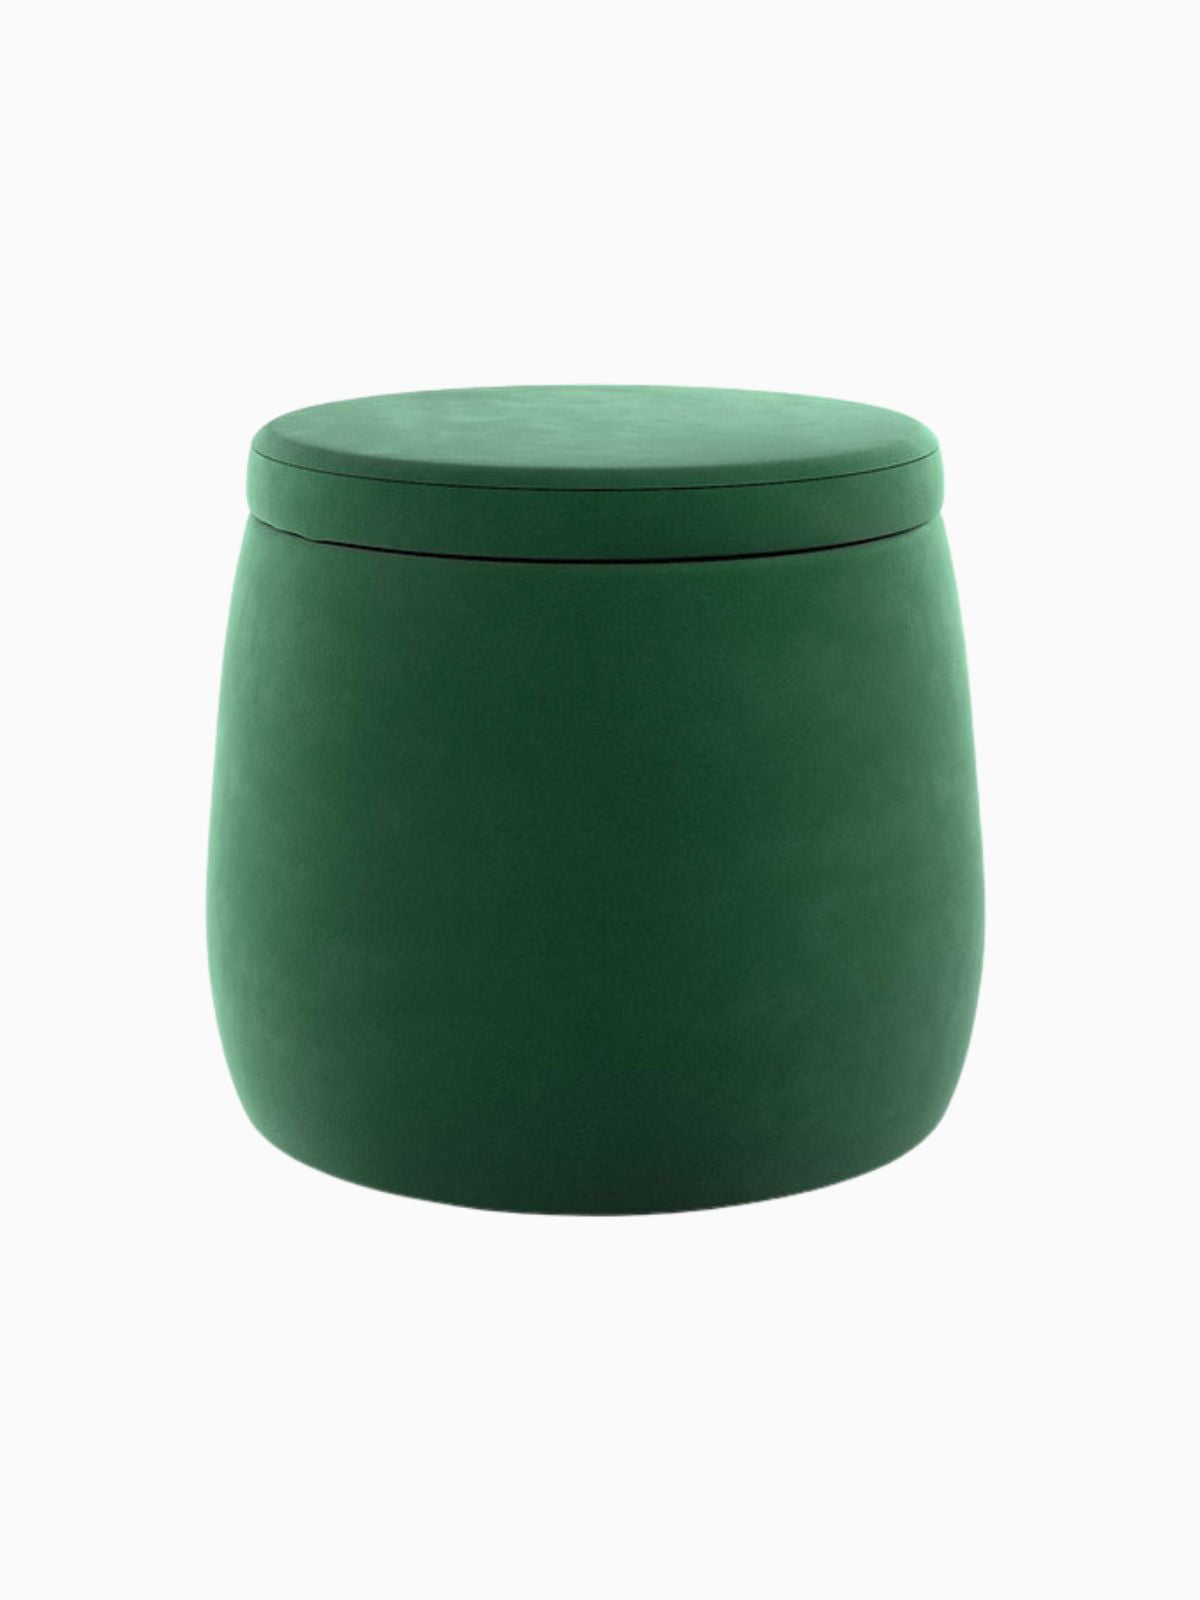 Pouf contenitore Candy Jar in velluto, colore verde 40x40 cm.-1